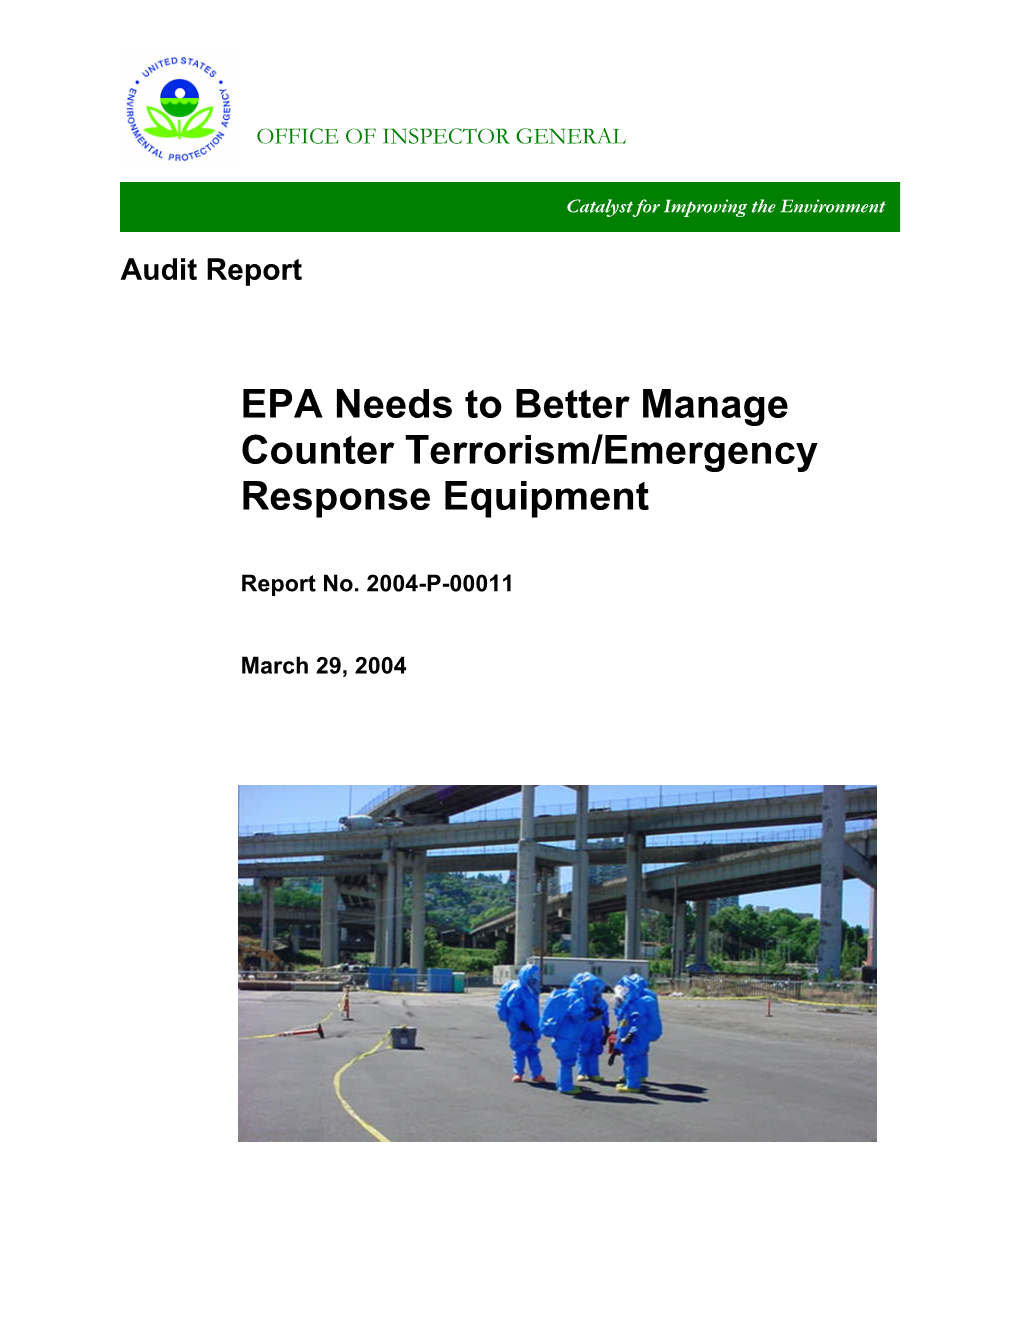 EPA Needs to Better Manage Counter Terrorism/Emergency Response Equipment